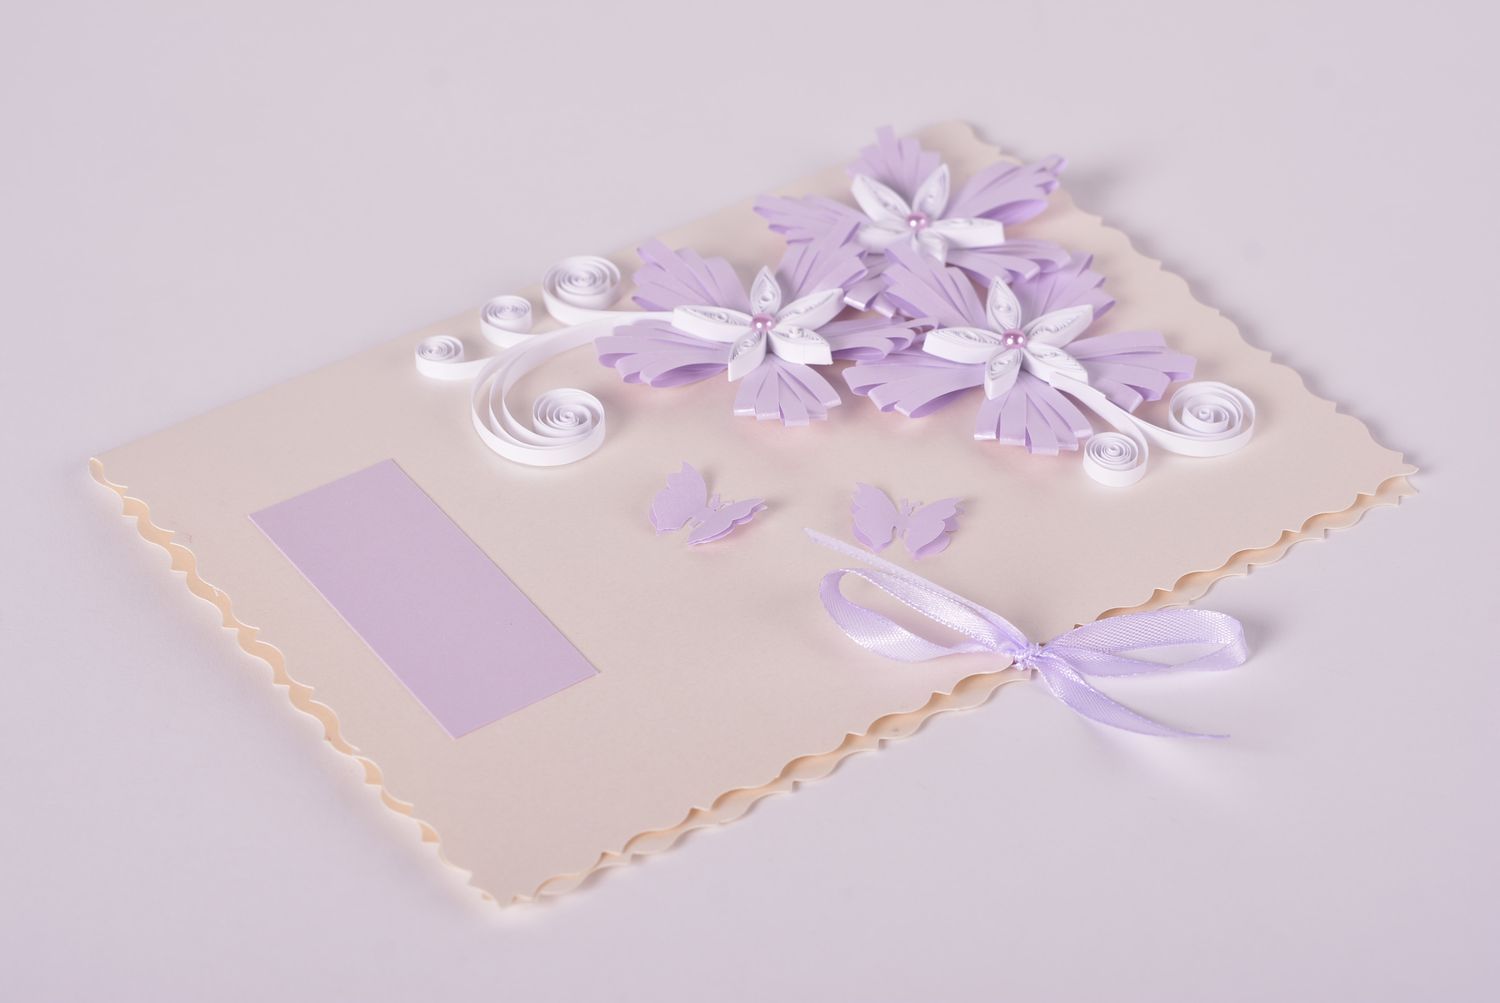 Handmade card unusual card for women designer greeting card gift ideas photo 1